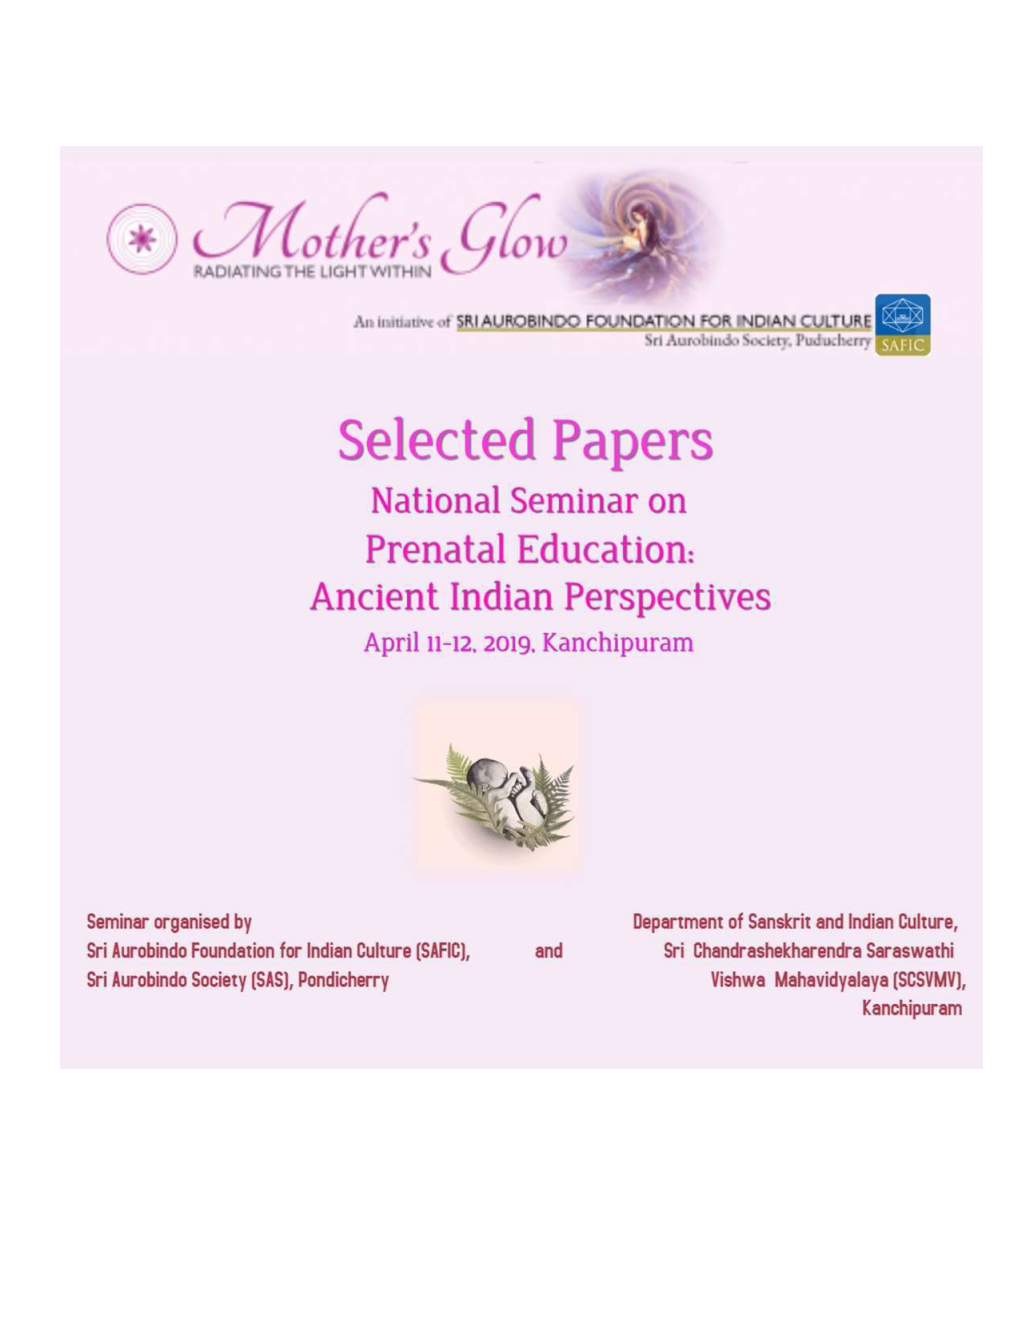 Prenatal Education: Ancient Indian Perspectives